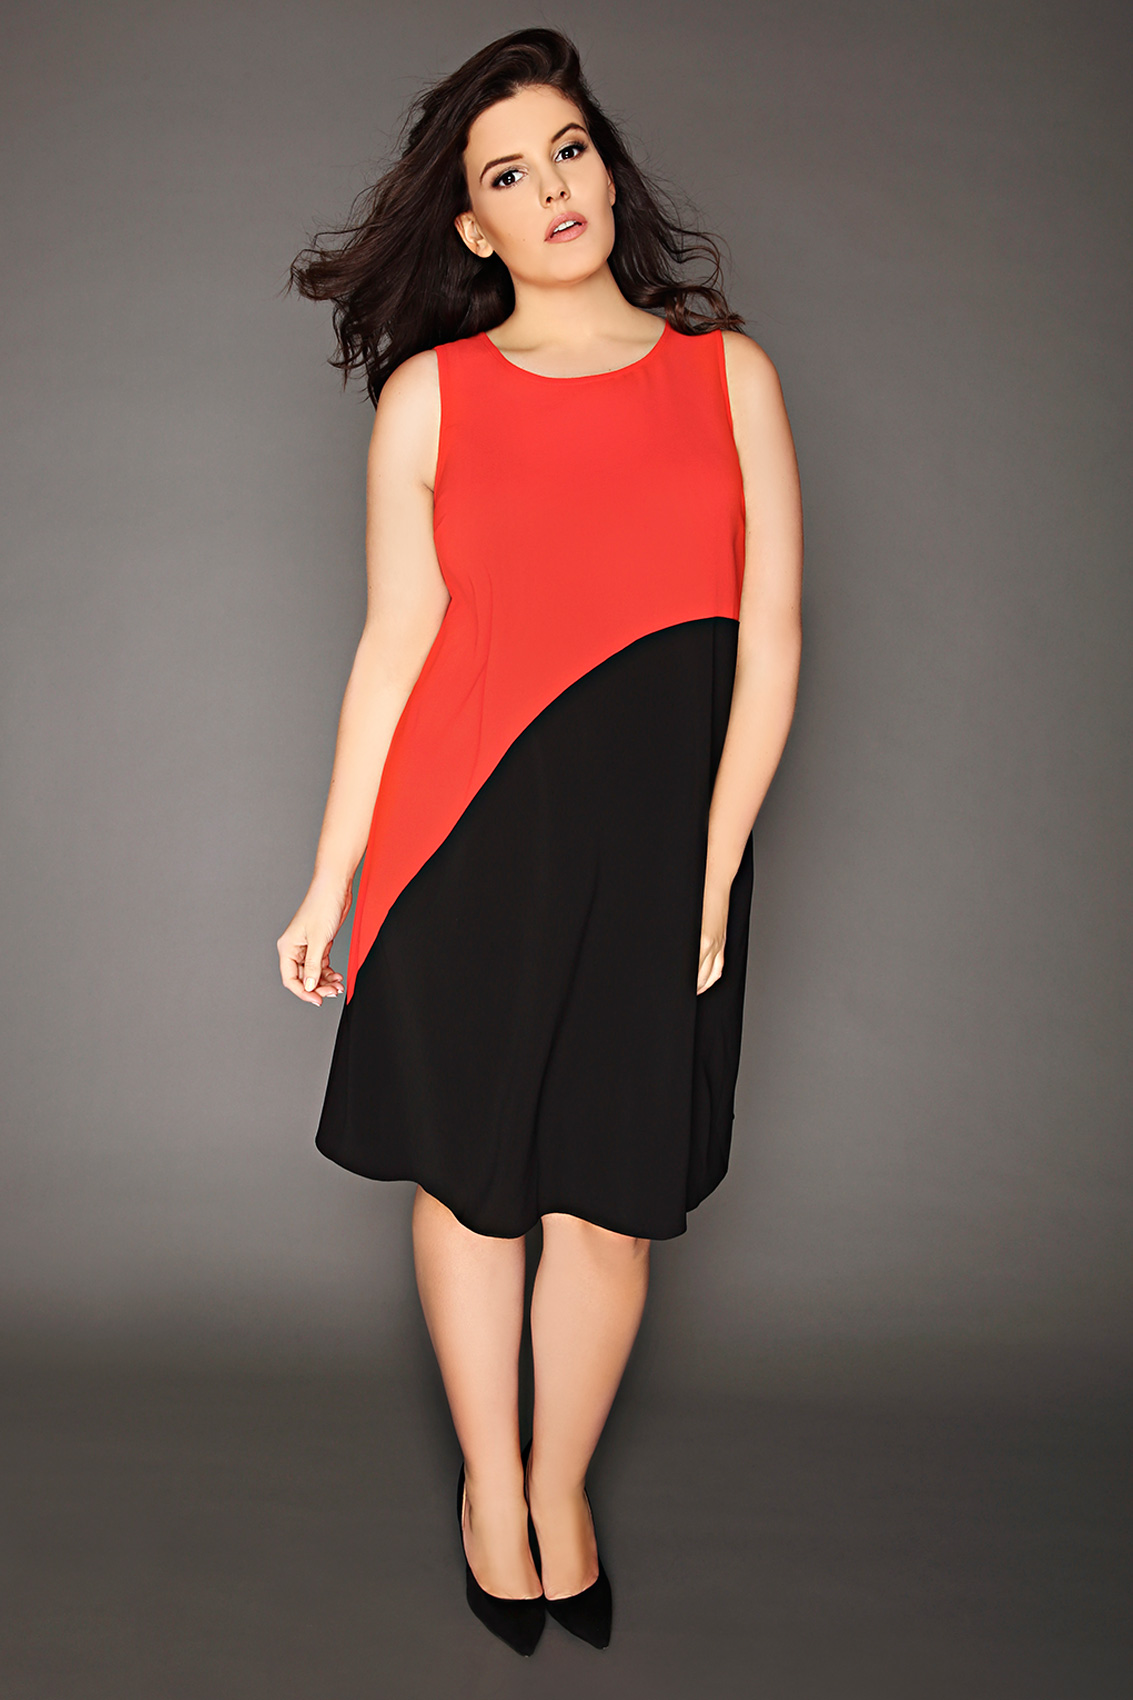 Red & Black Asymmetrical Colour Block Dress Plus Size 14 to 36